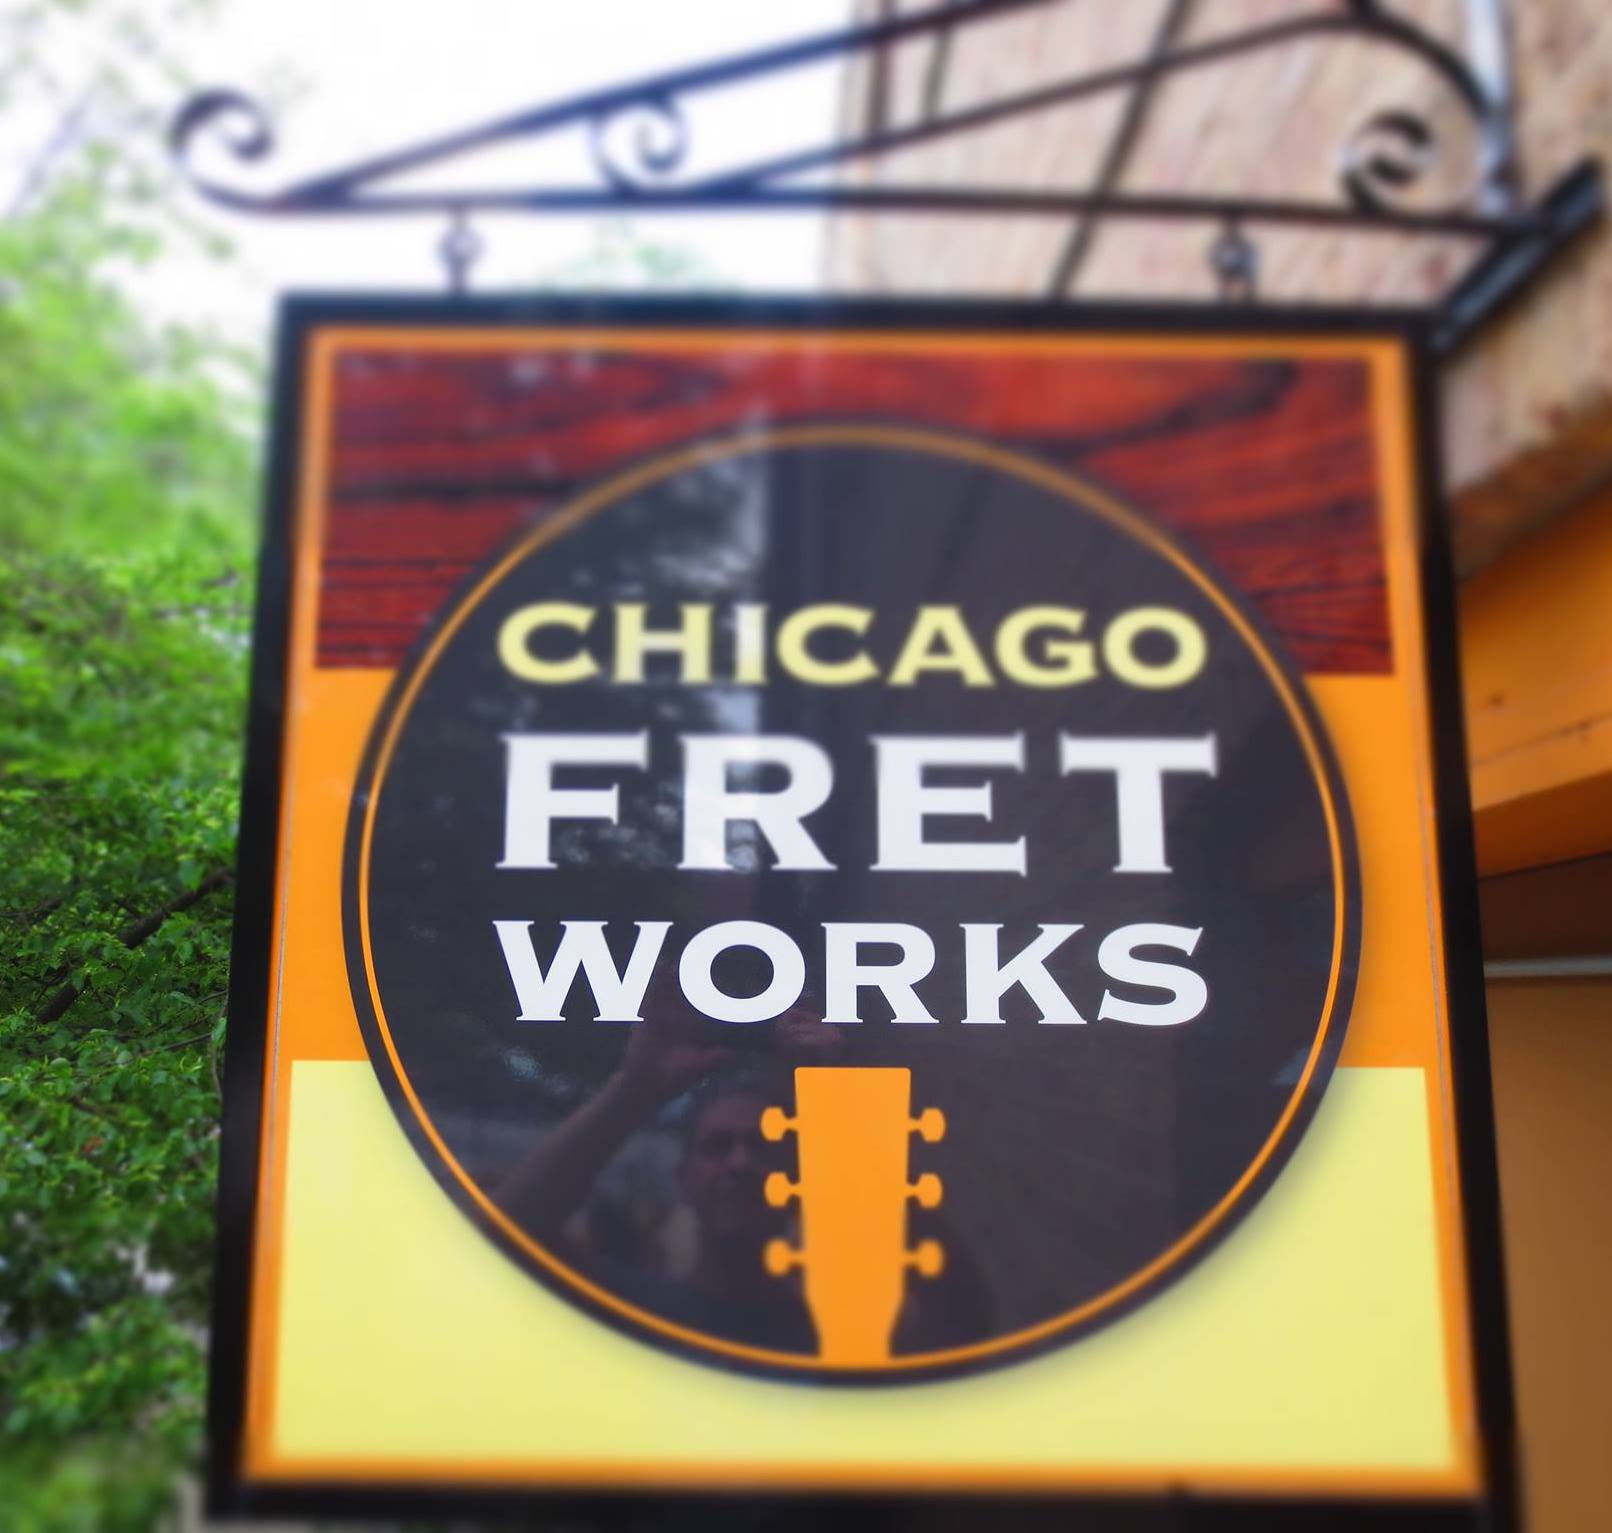 Chicago Fret Works